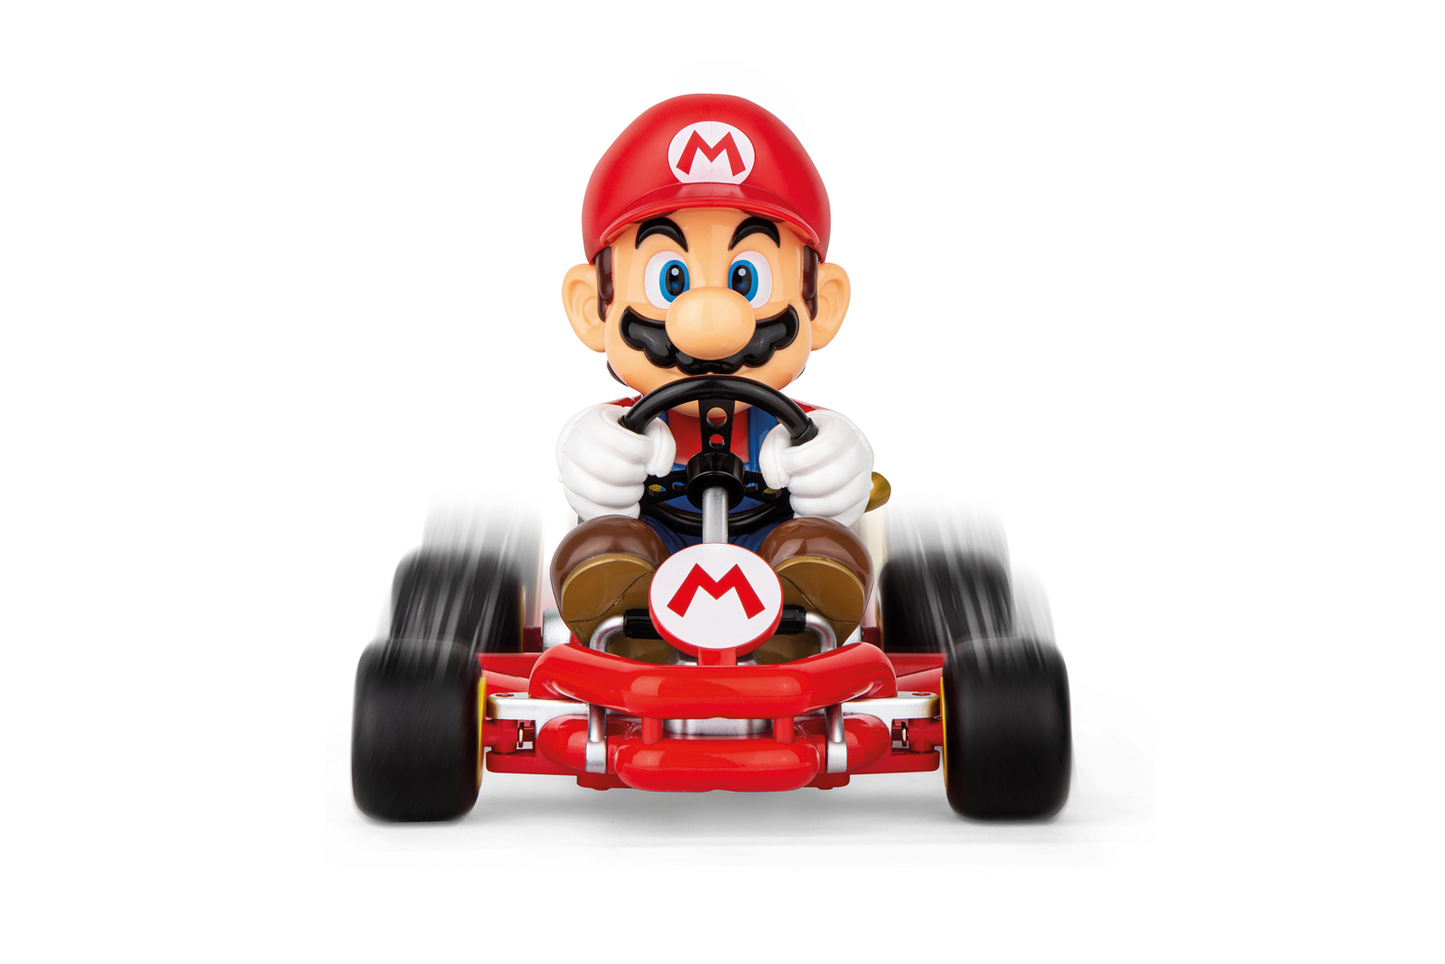 Carrera RC 2,4GHz Mario Kart™ Pipe Kart, Mario